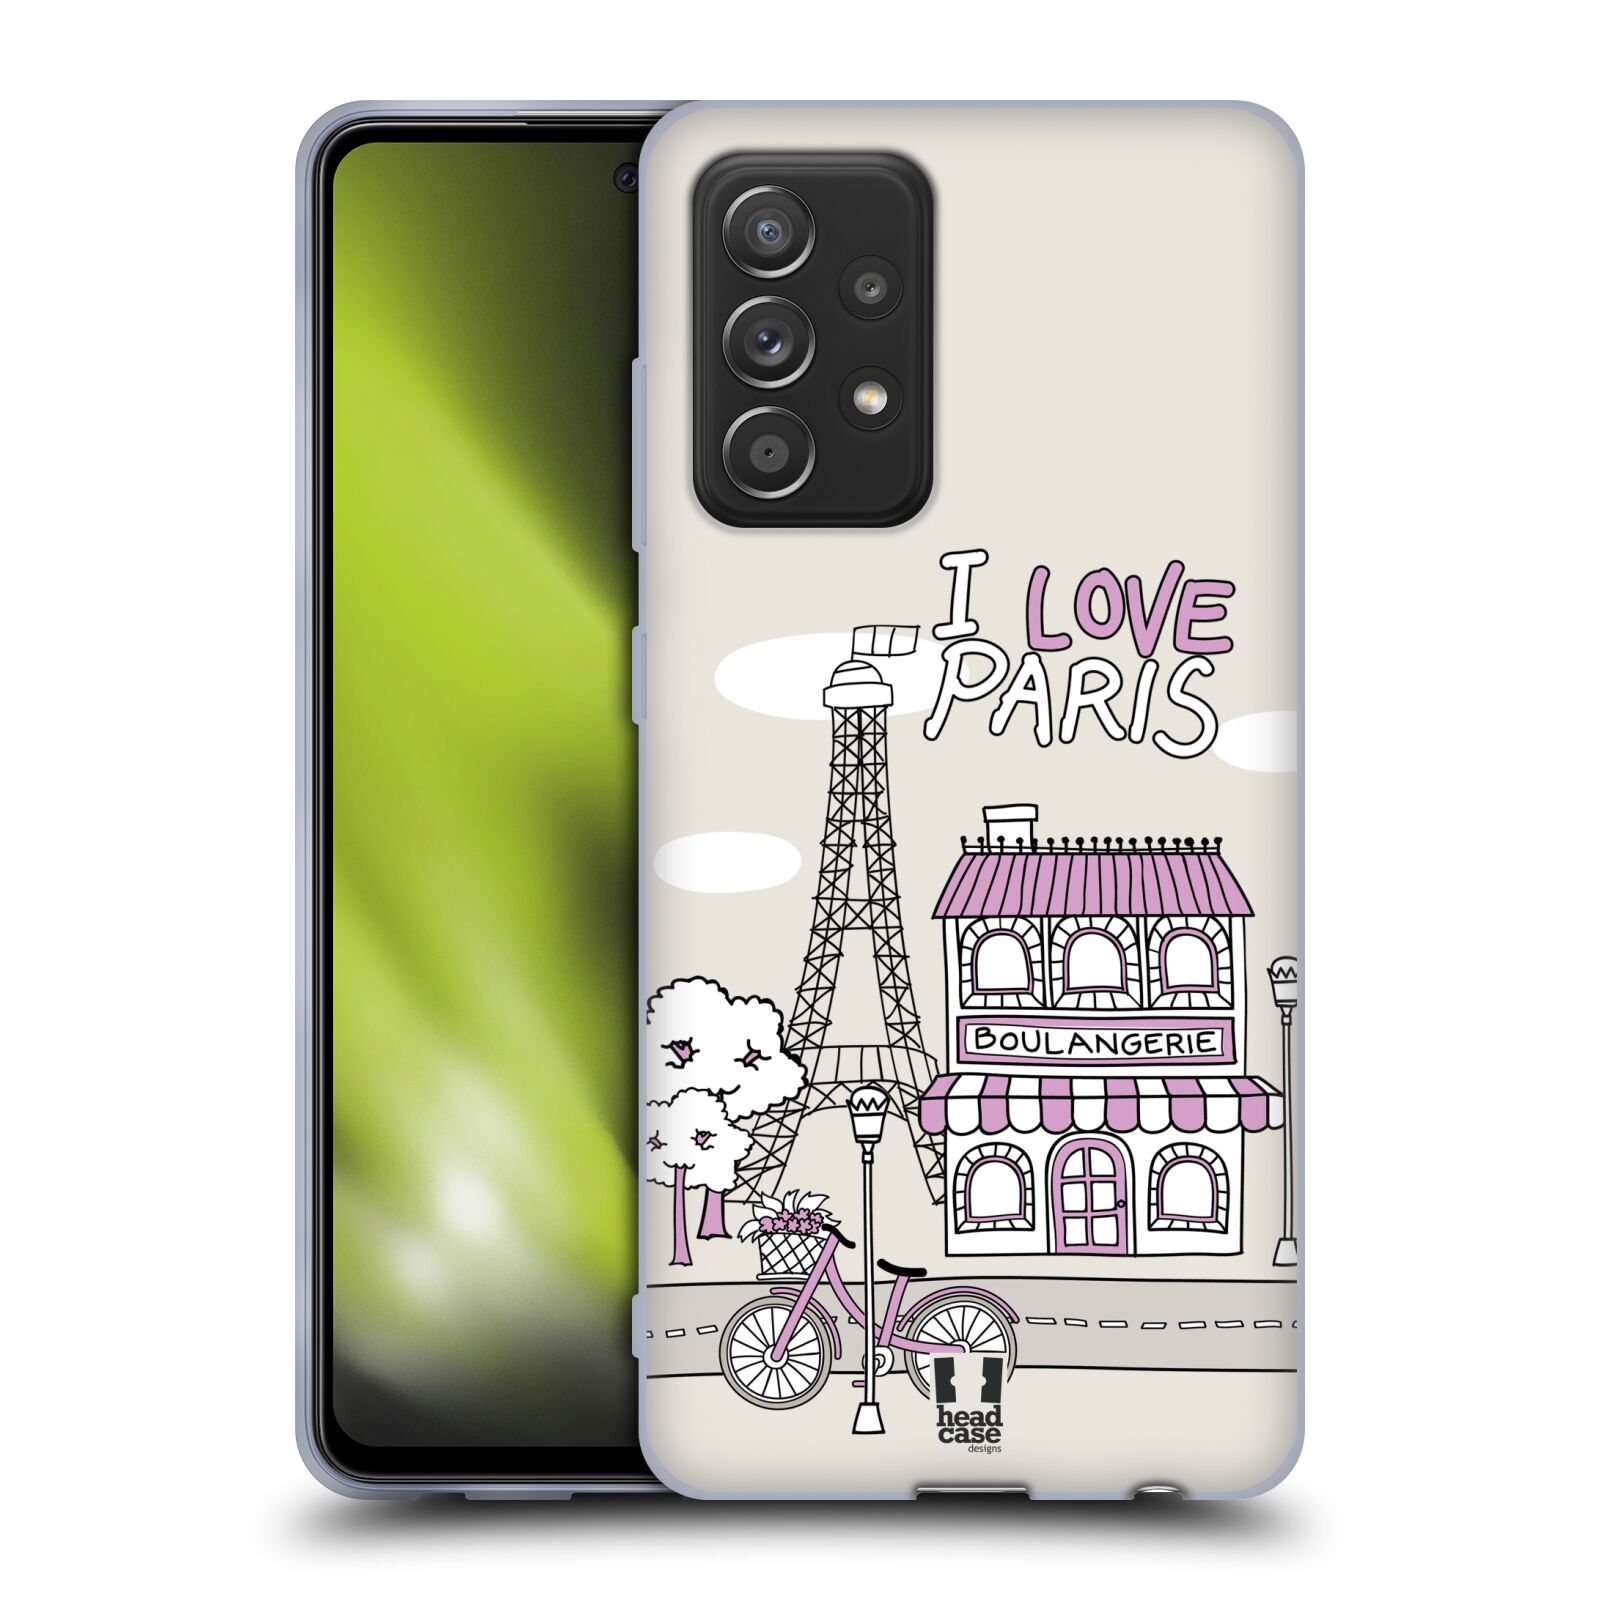 Plastový obal HEAD CASE na mobil Samsung Galaxy A52 / A52 5G / A52s 5G vzor Kreslená městečka FIALOVÁ, Paříž, Francie, I LOVE PARIS